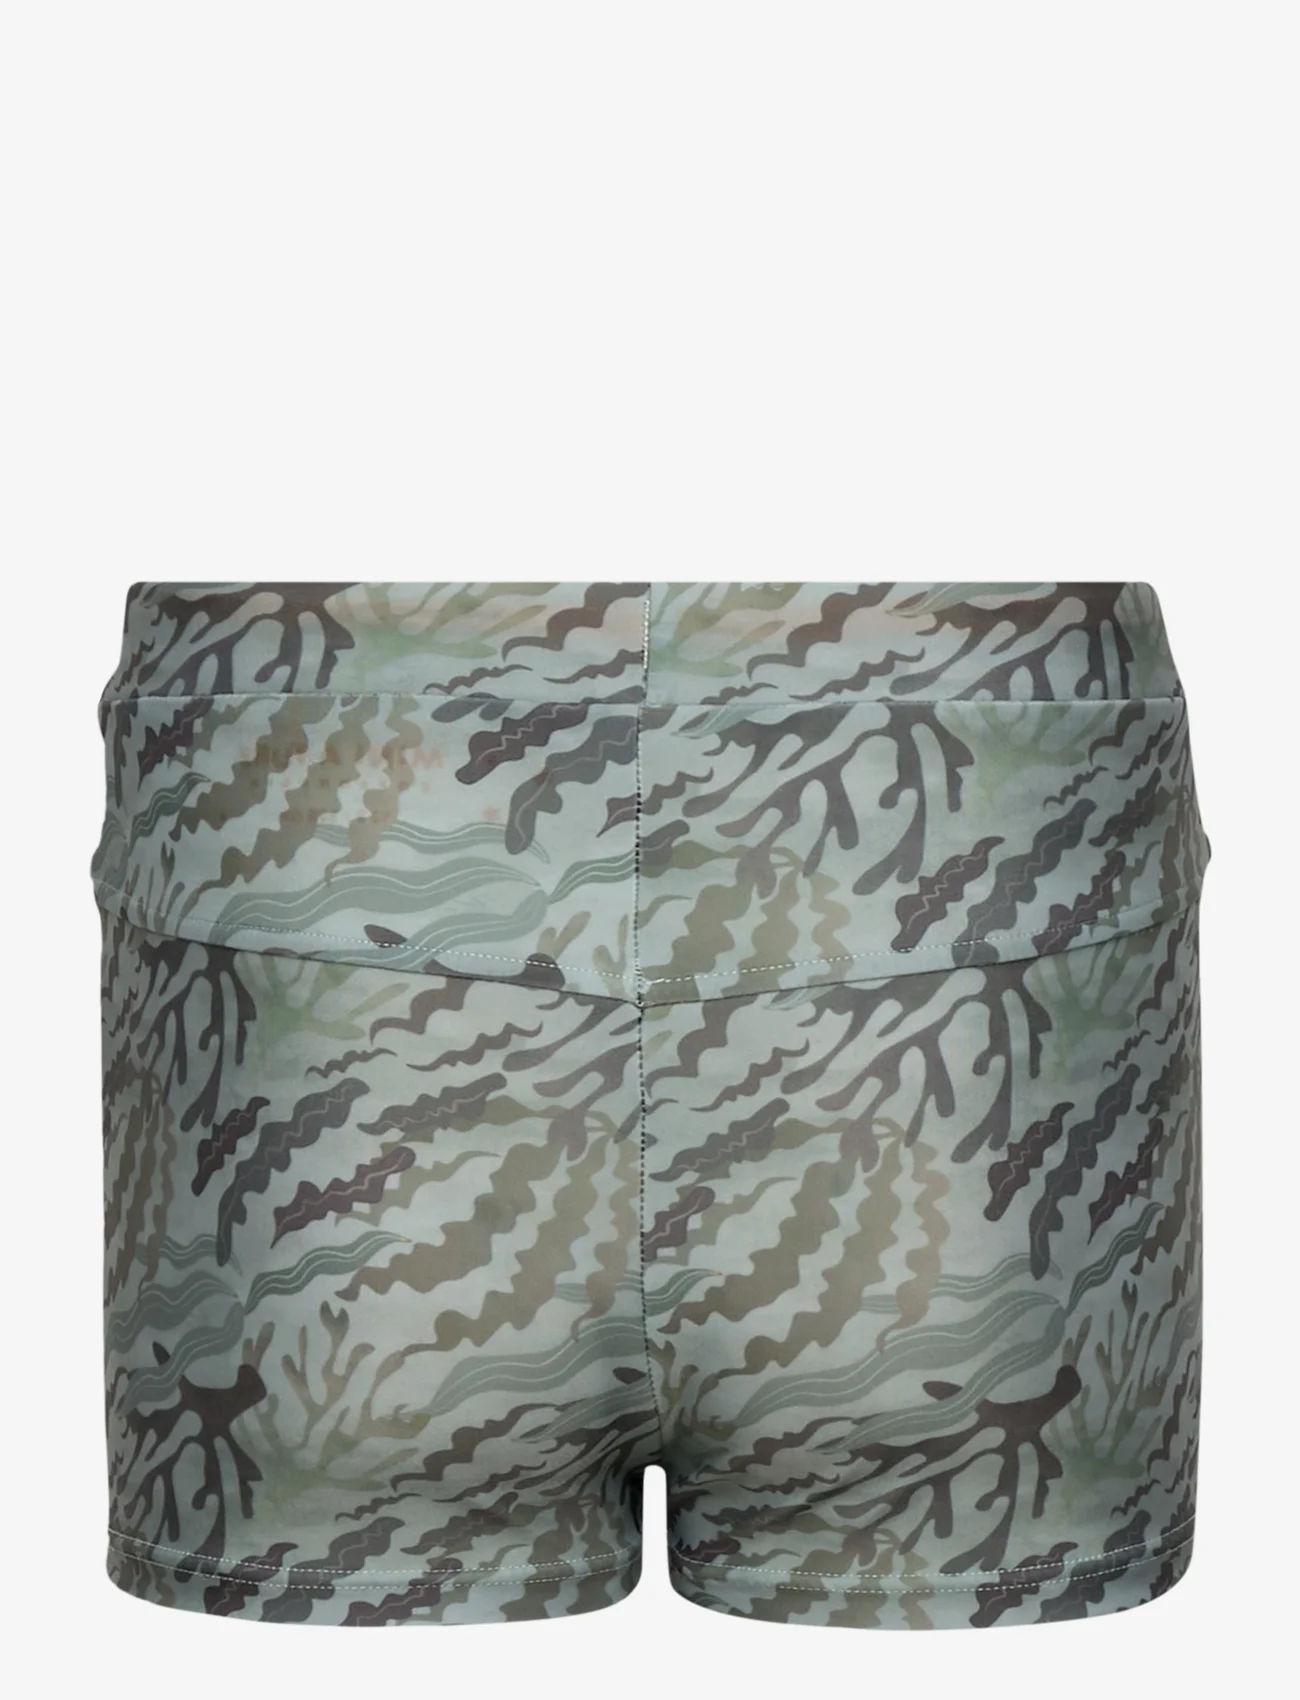 Mini A Ture - Gerryan printed swim shorts - zomerkoopjes - print sea weed camo - 1